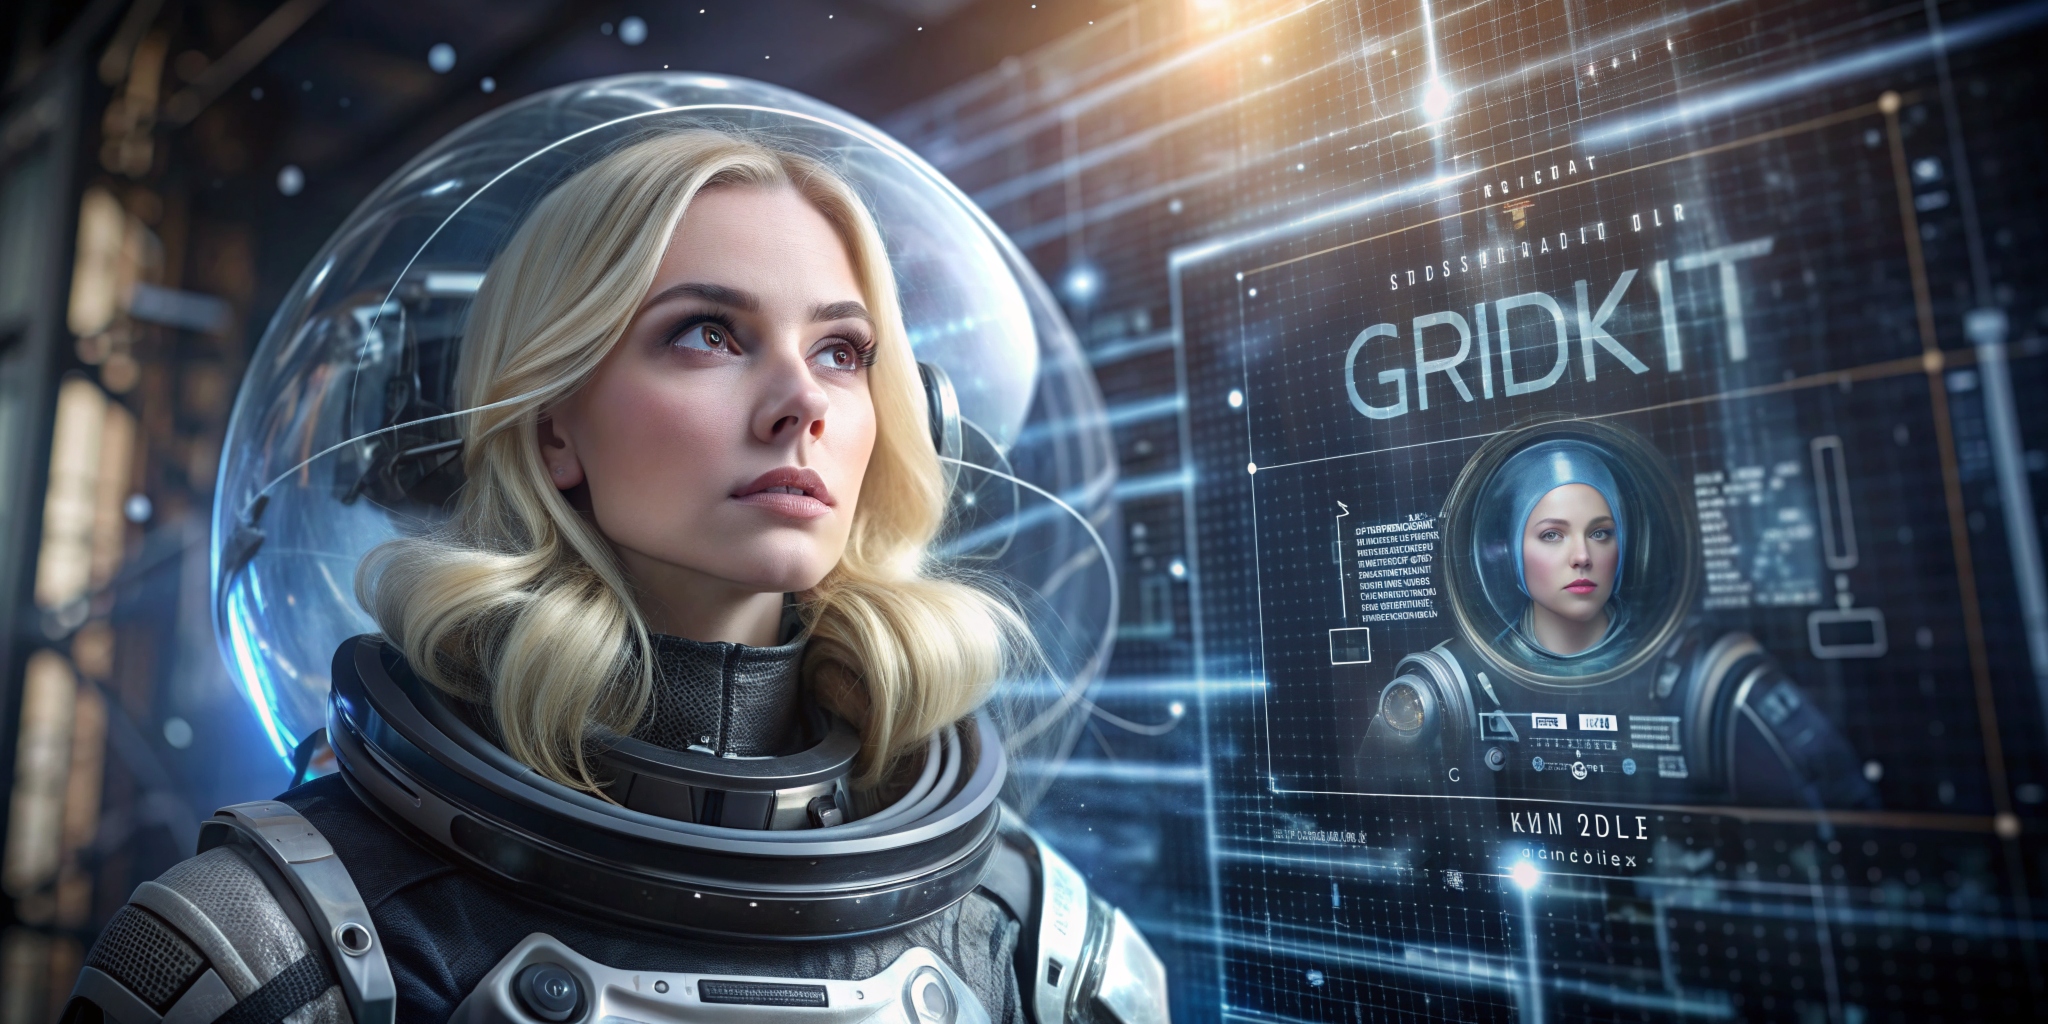 programmer-gridkit-girl-in-space